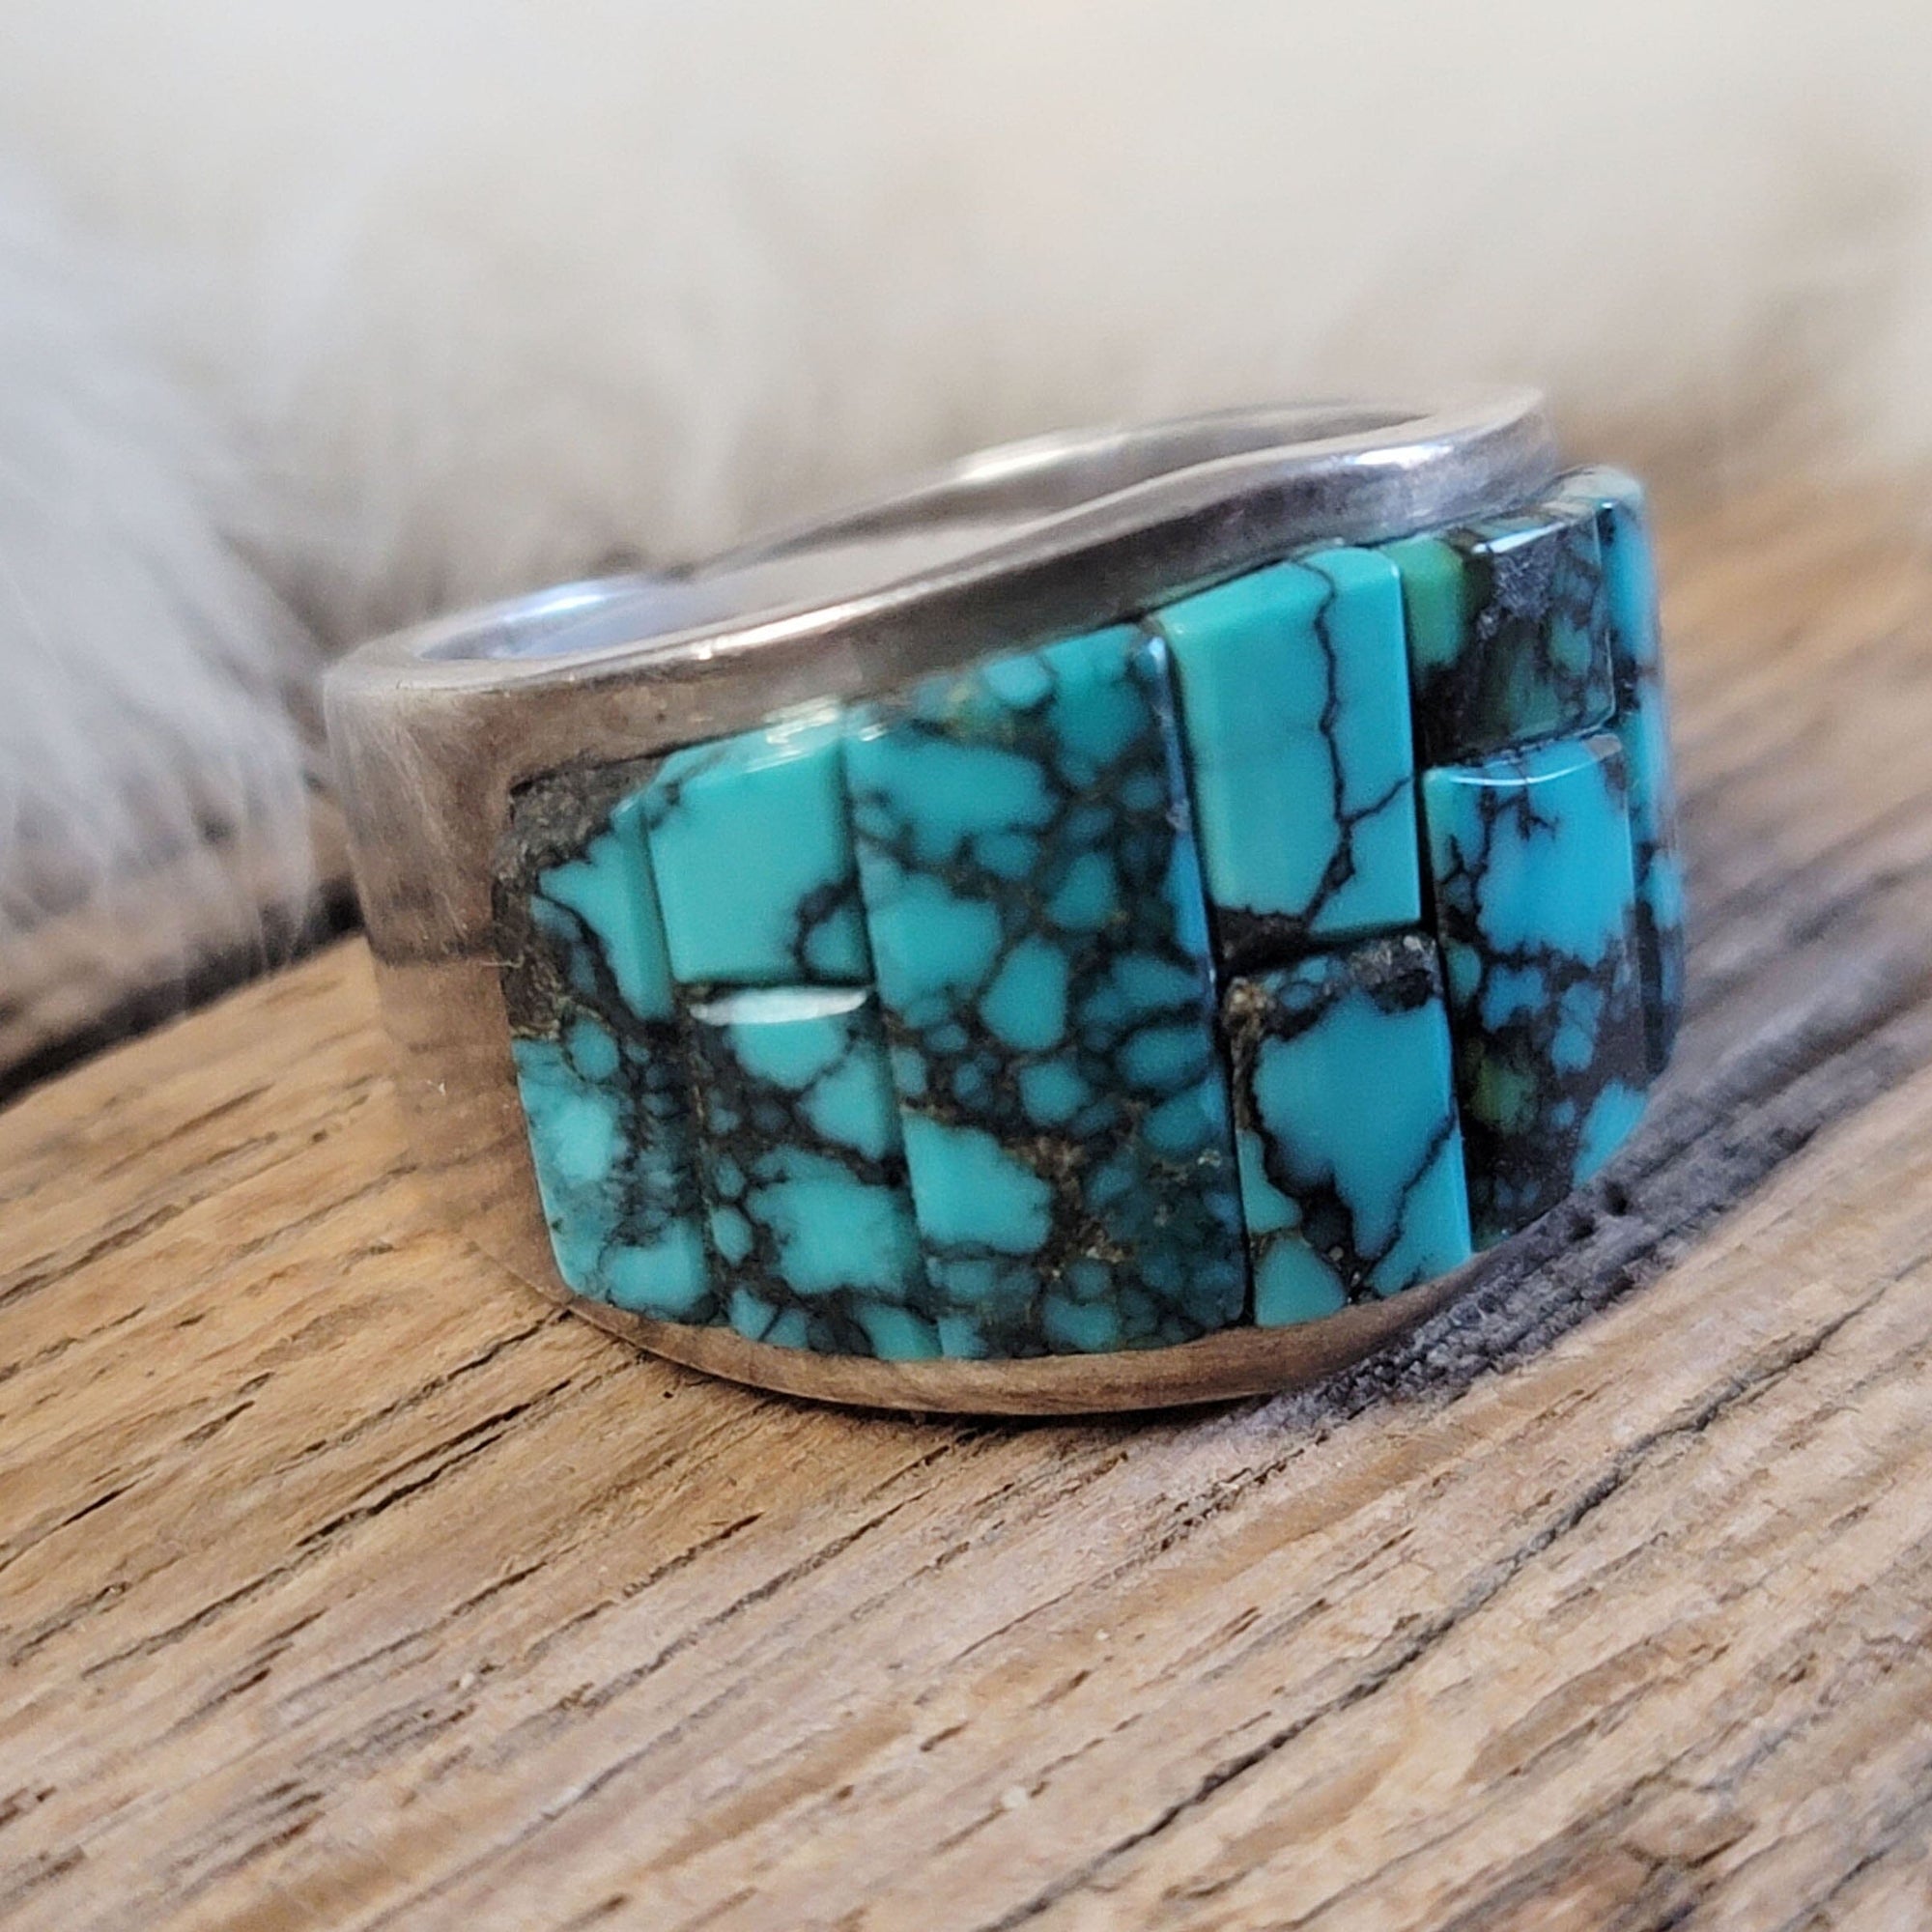 Turquoise Jackson Ring - Size 10 - RMH18